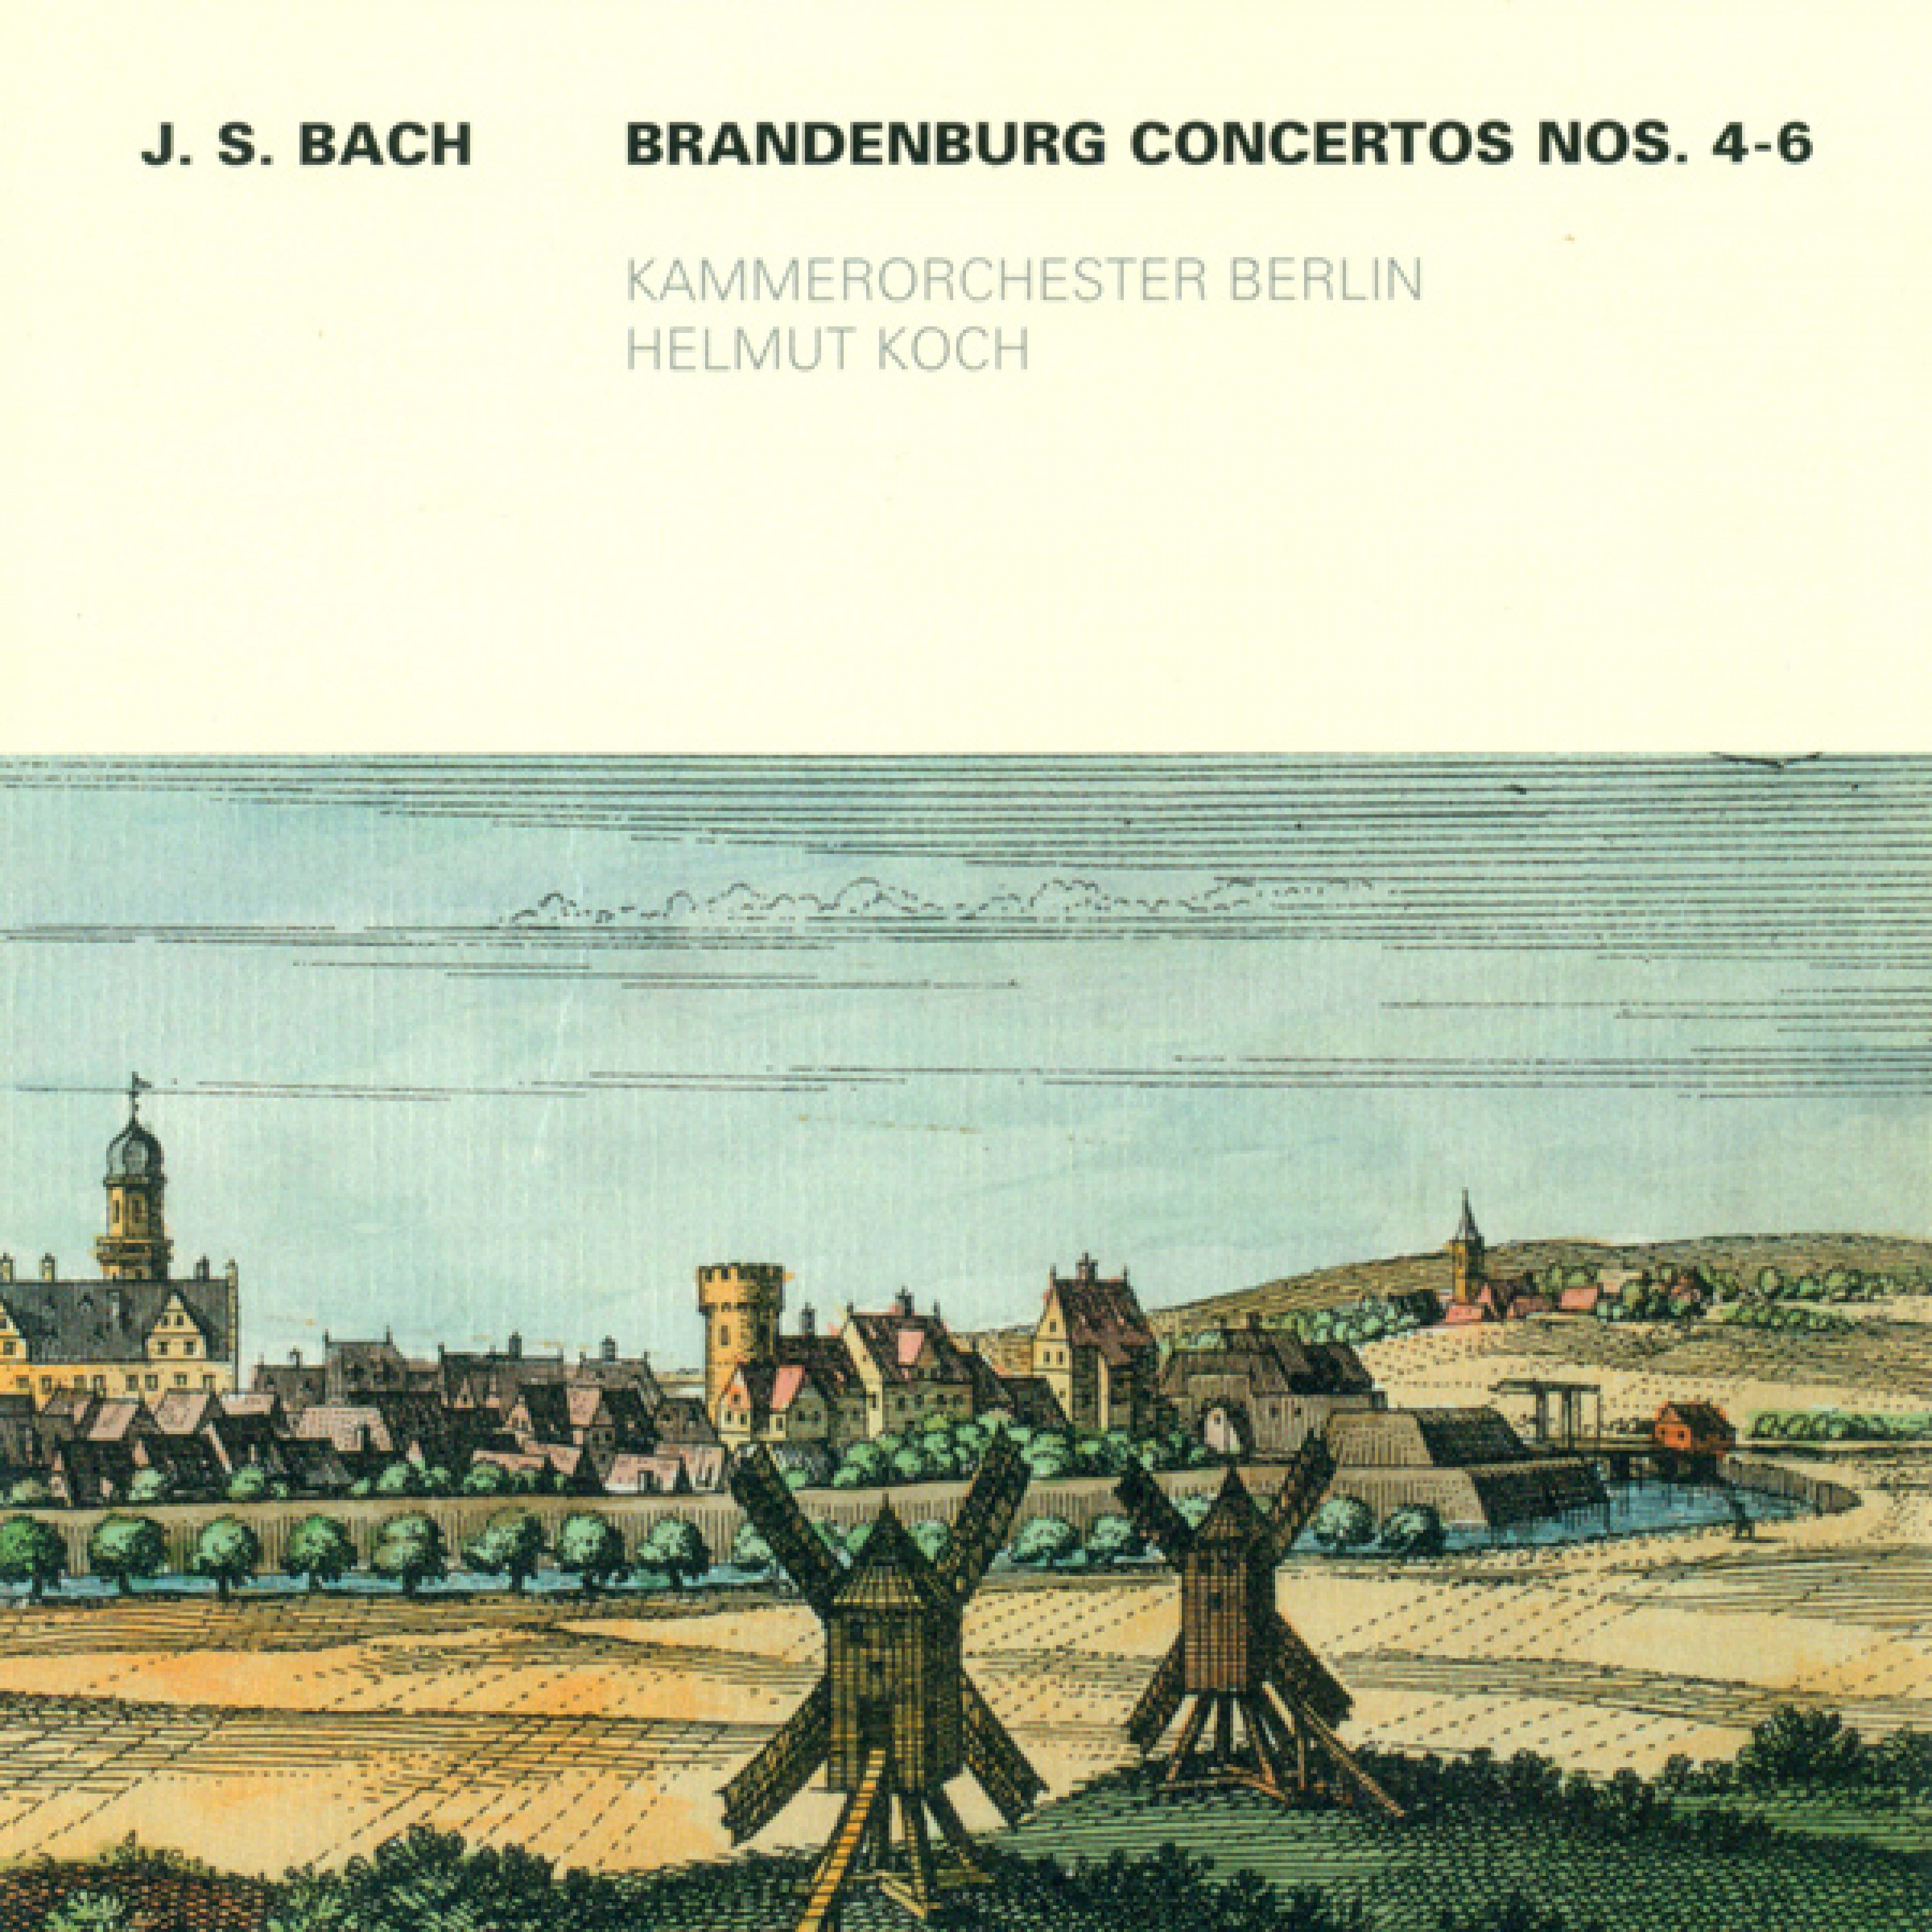 Brandenburg Concerto No. 6 in B flat major, BWV 1051: III. Allegro